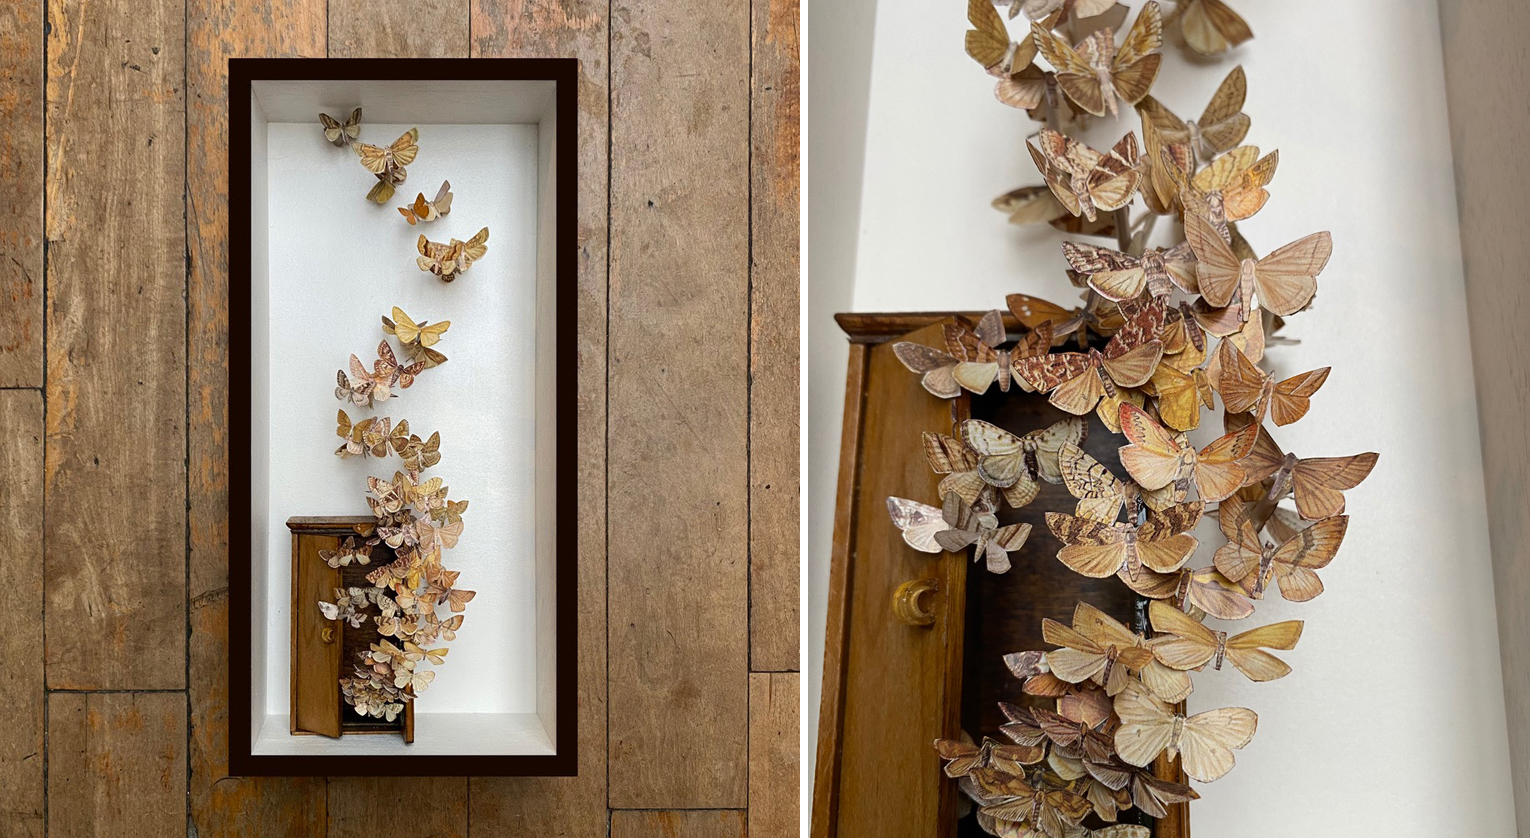 Nikki Ward moths and wardrobe paper-cut sculpture, 36.5x17.5x7.5cm